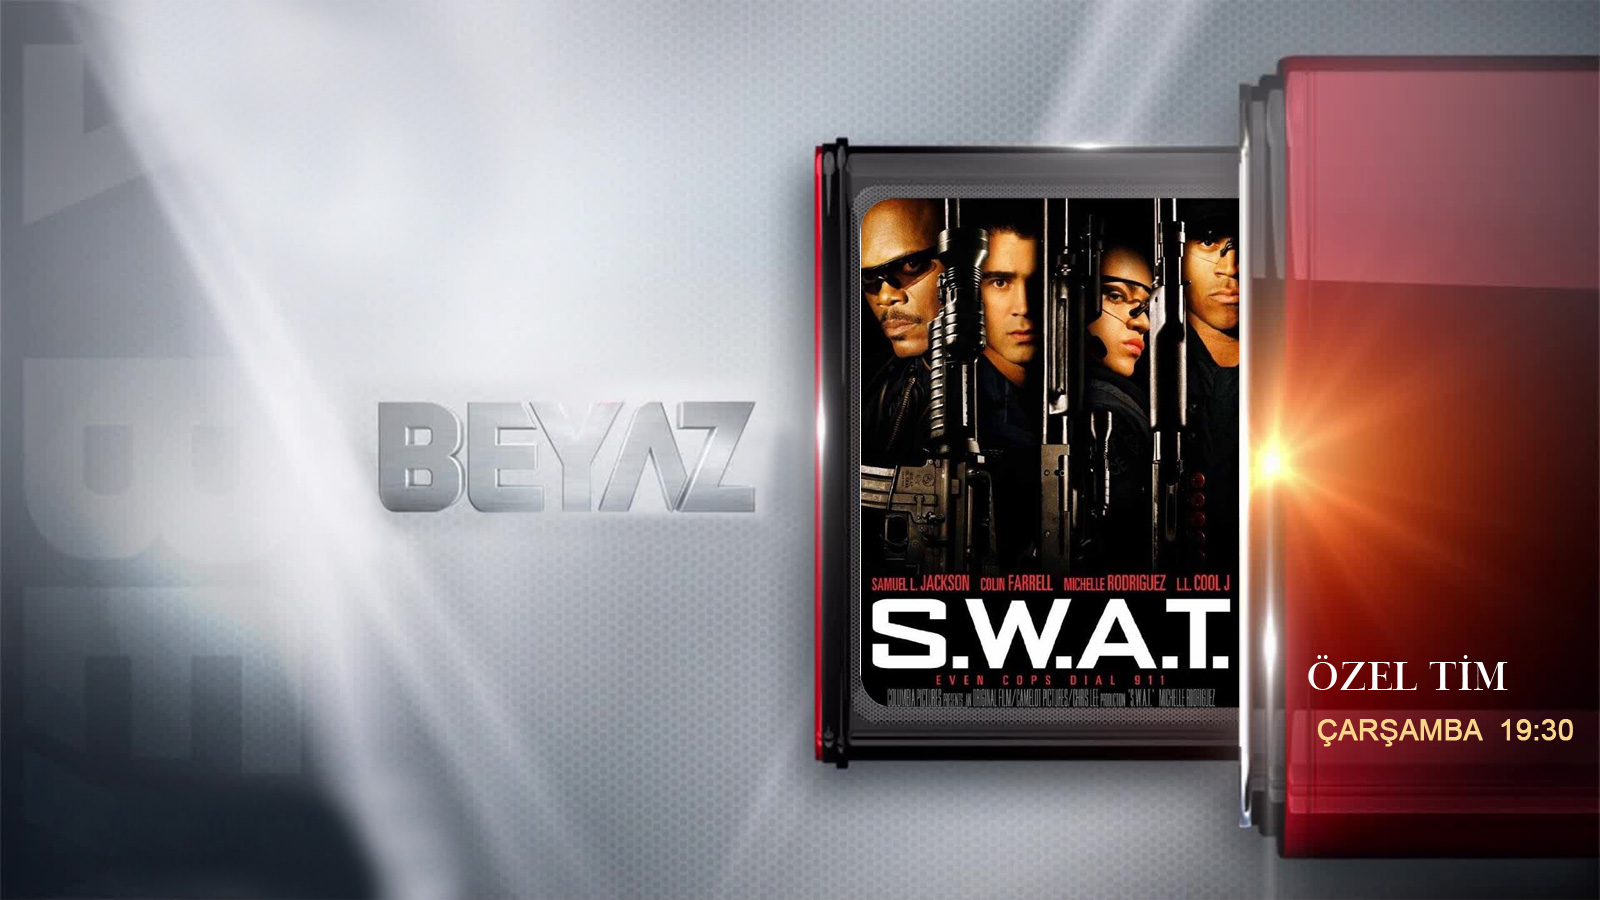 S.W.A.T. / S.W.A.T.: Firefight (DVD), Michelle Rodriguez, DVD